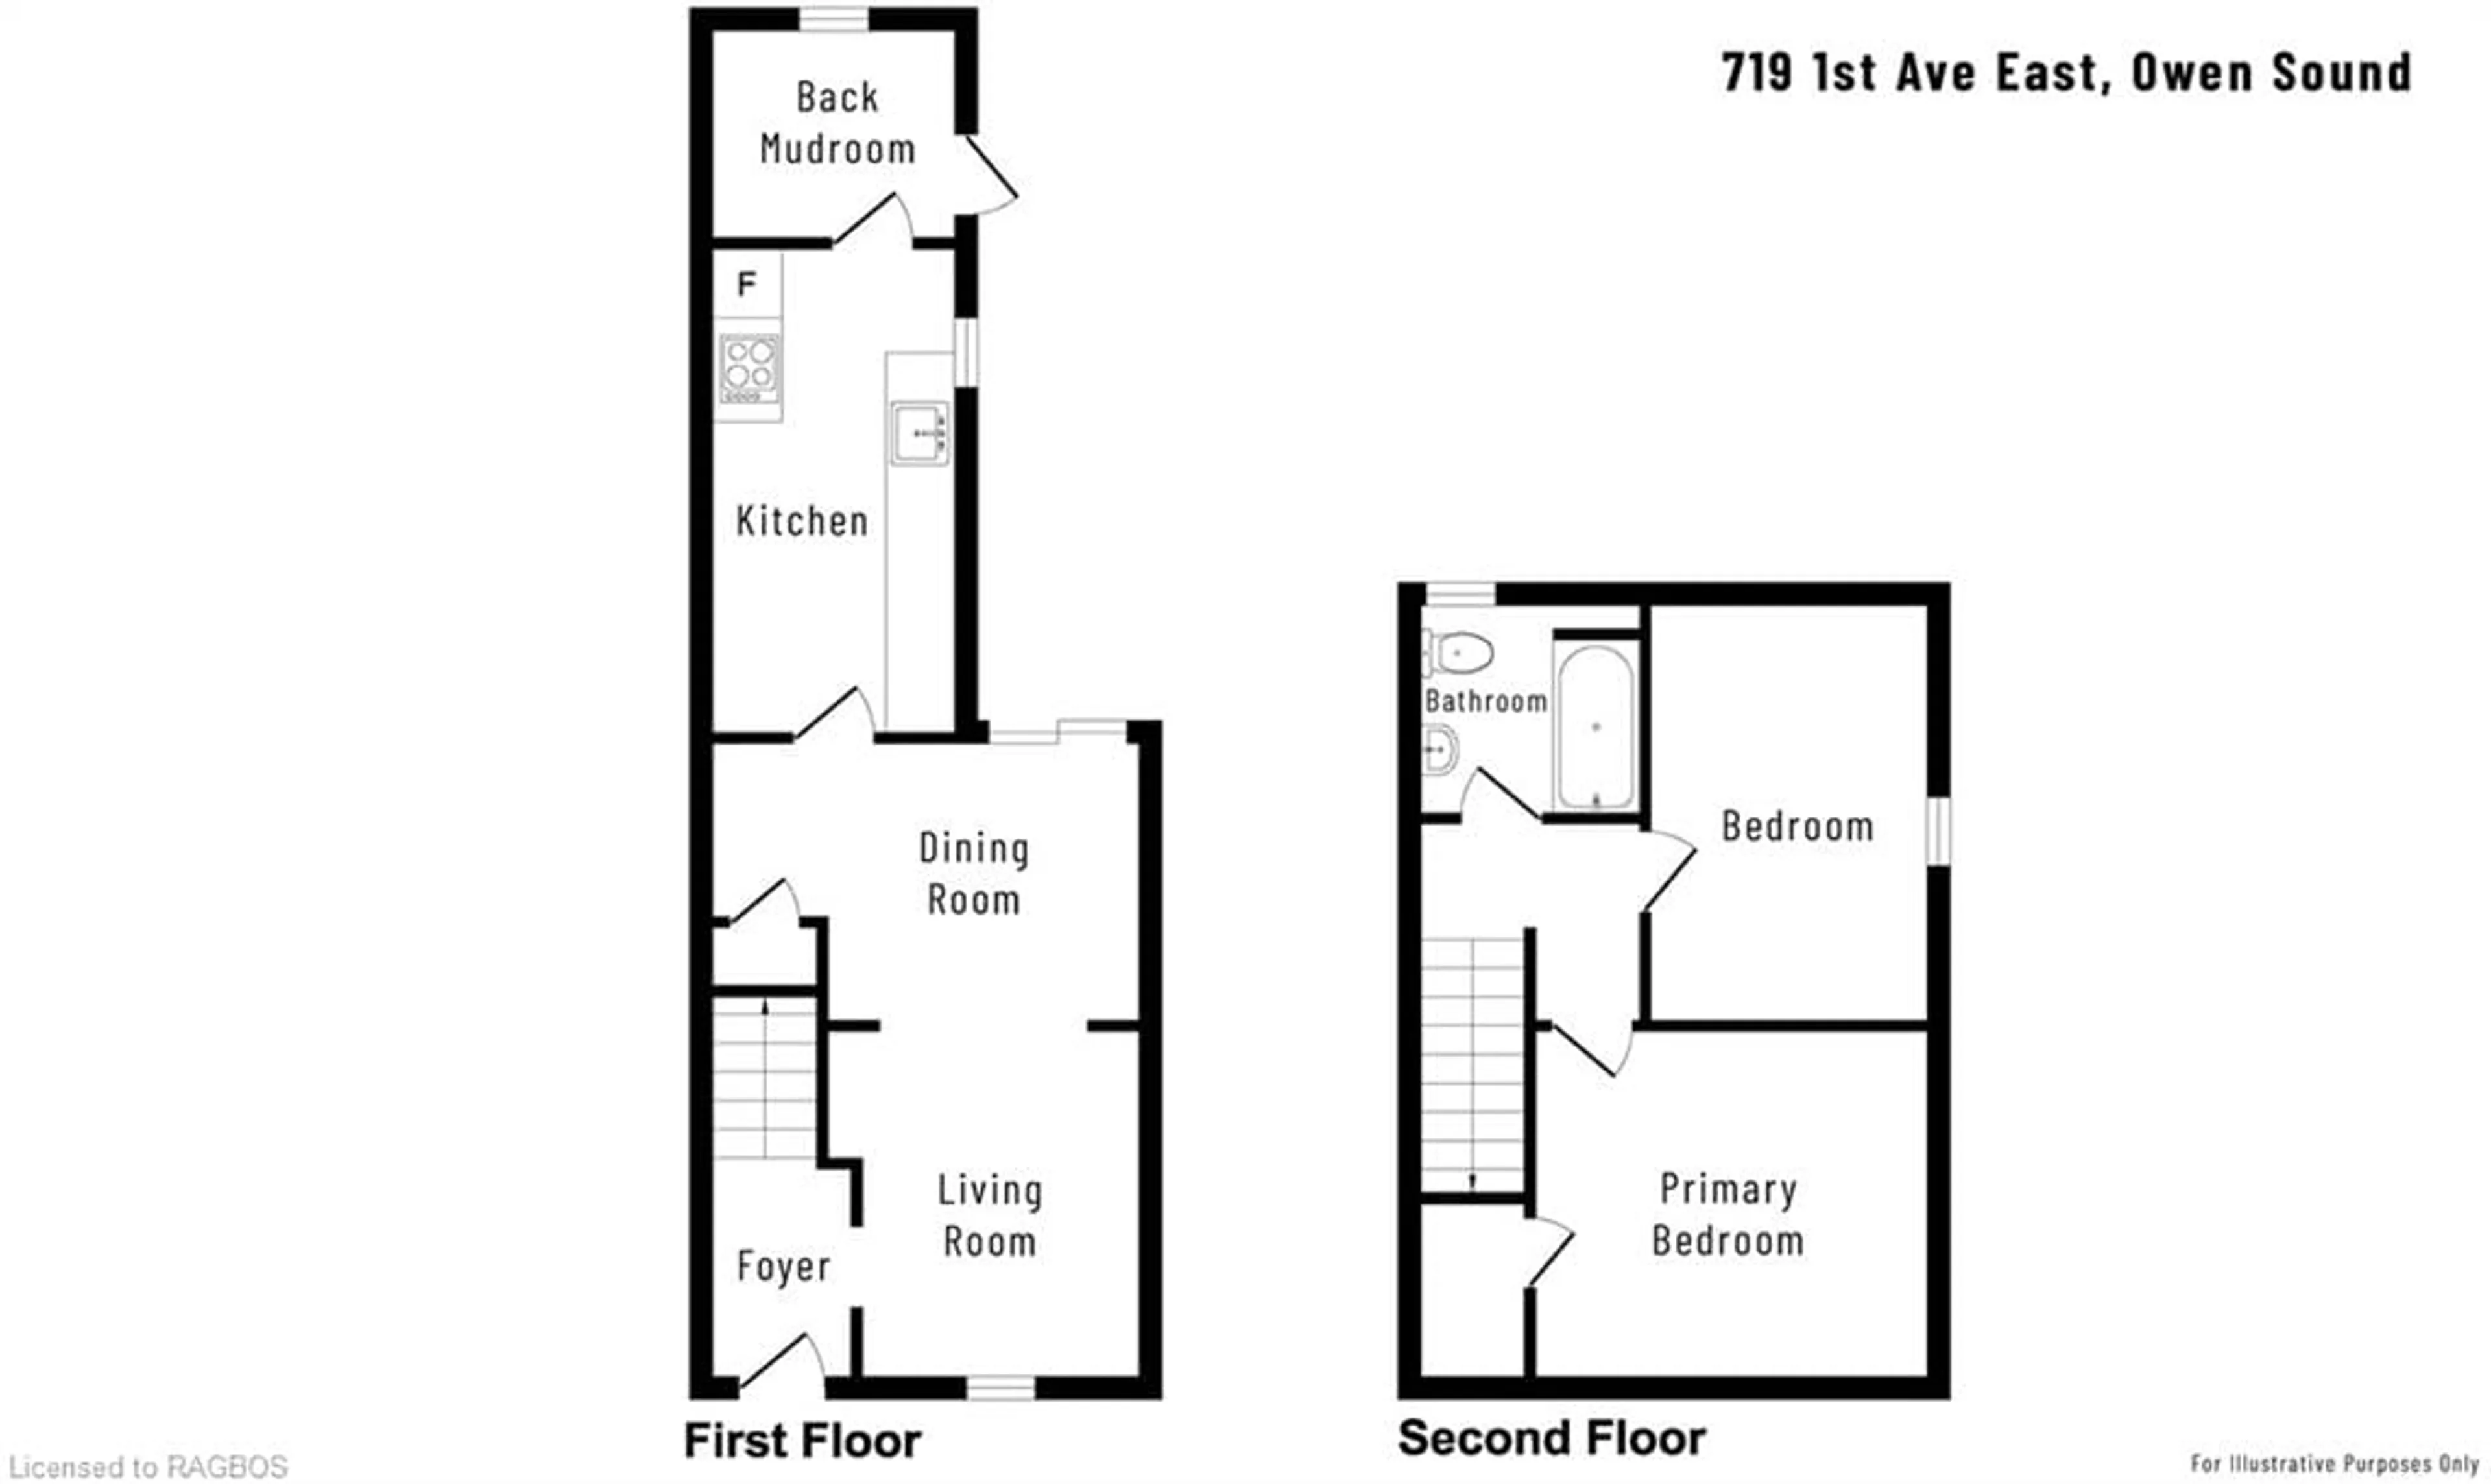 Floor plan for 719 1st Ave, Owen Sound Ontario N4K 2C6